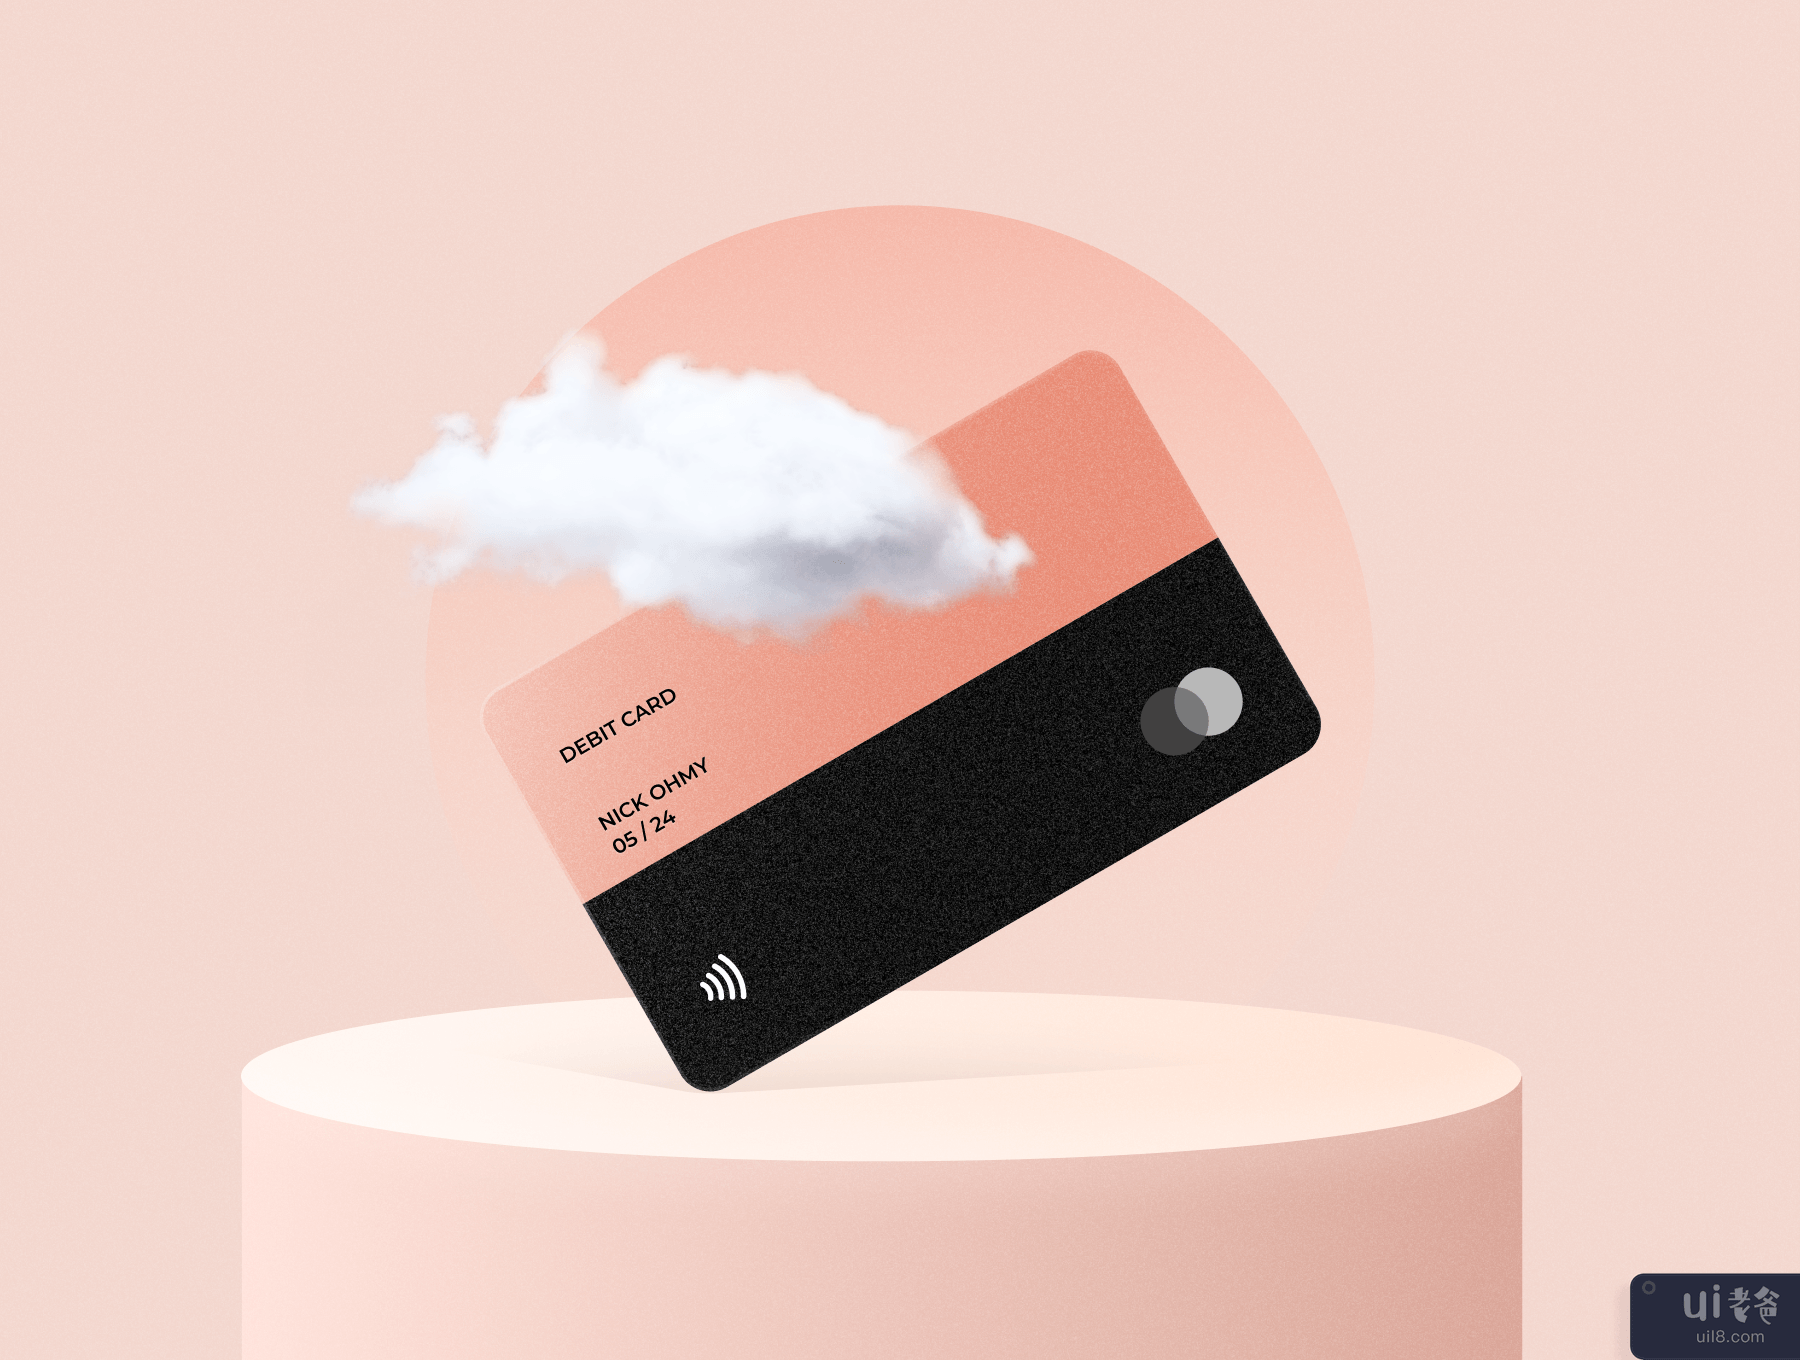 Figma 光面银行卡套件(Glossy Bank Card Kit for Figma)插图6